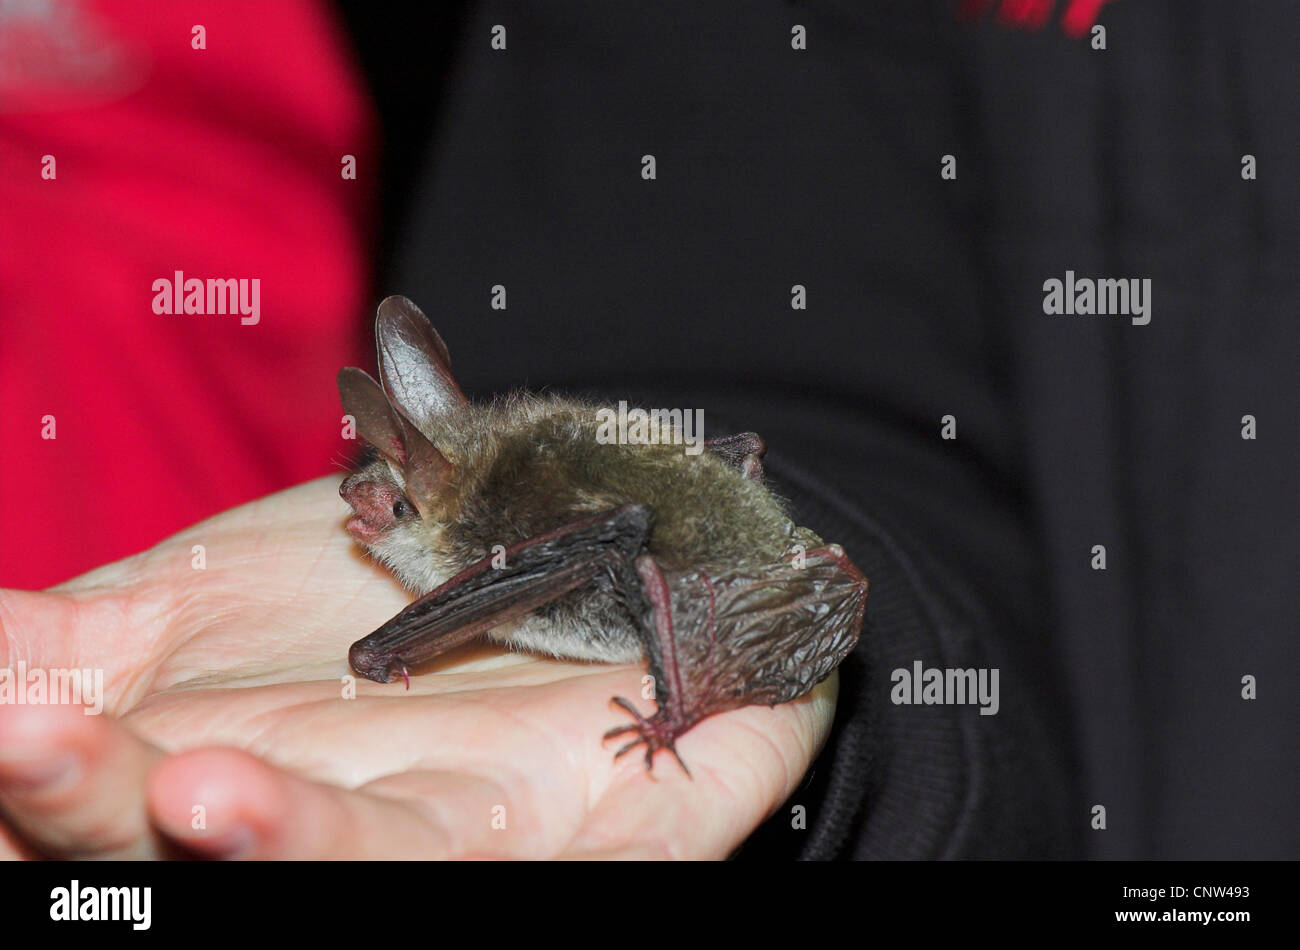 bat (Chiroptera), on a hand Stock Photo